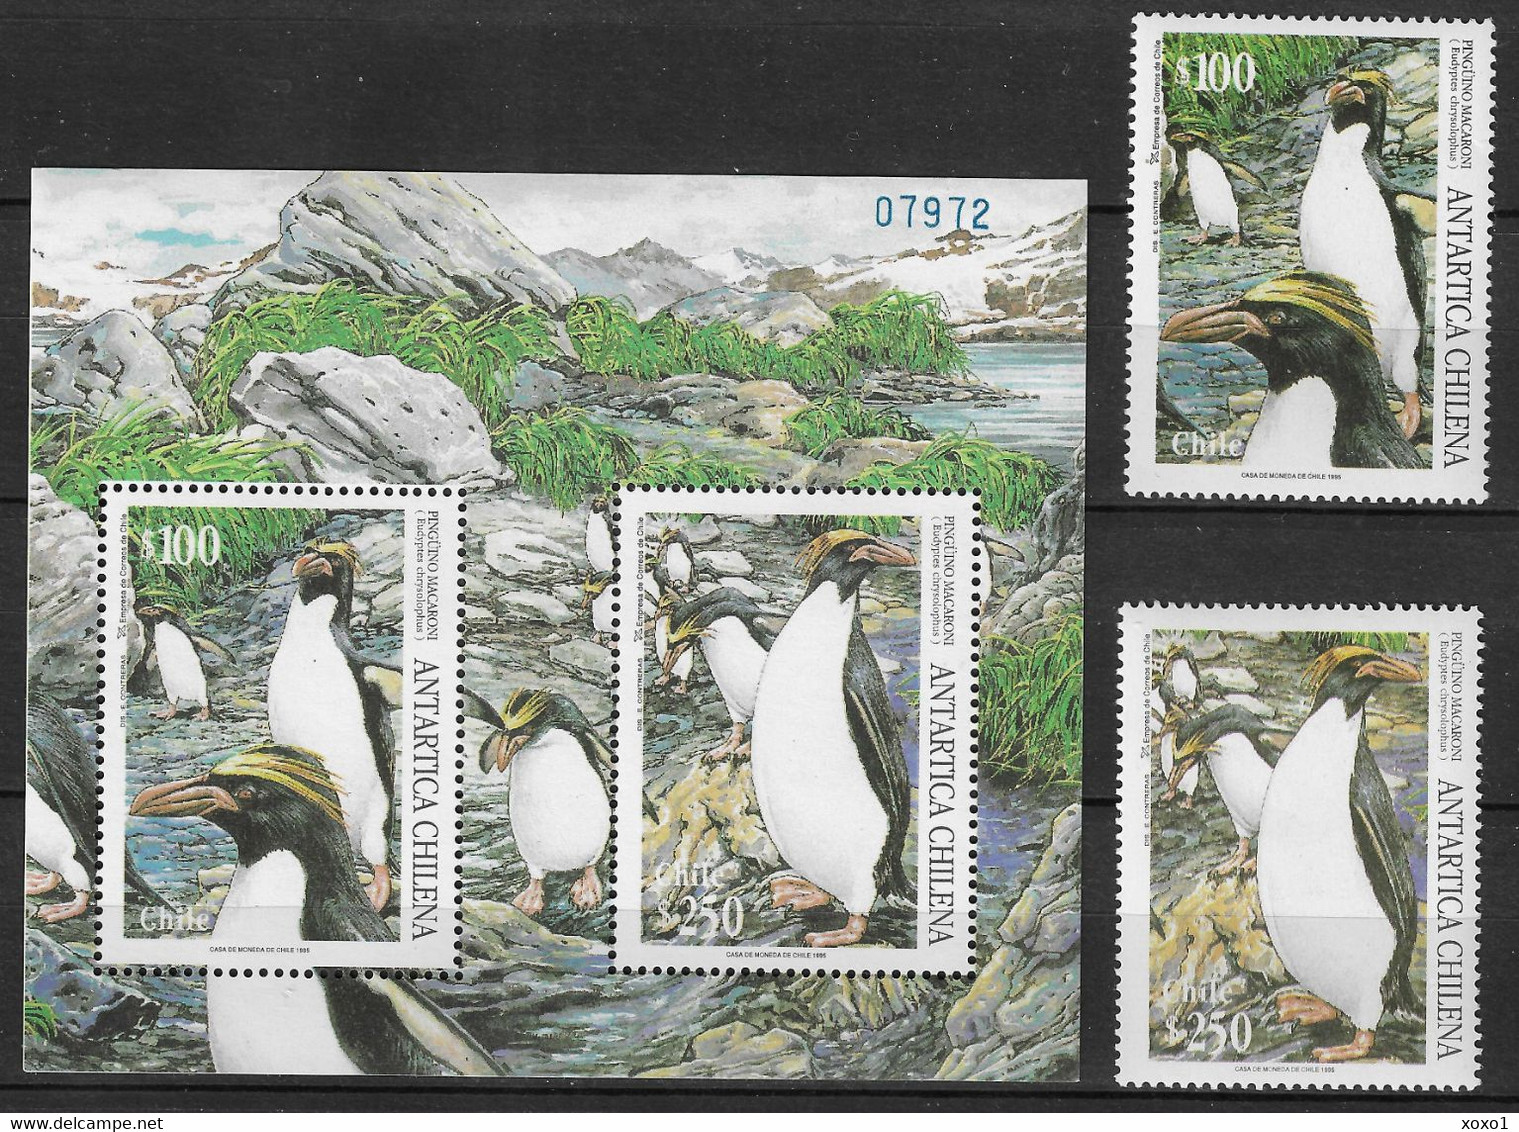 Chile 1995 MiNr. 1684 - 1685 (Block 32) South Pole  Antarctic Wildlife Birds Macaroni Penguin 2v +1s/sh MNH** 9.50 € - Antarktischen Tierwelt